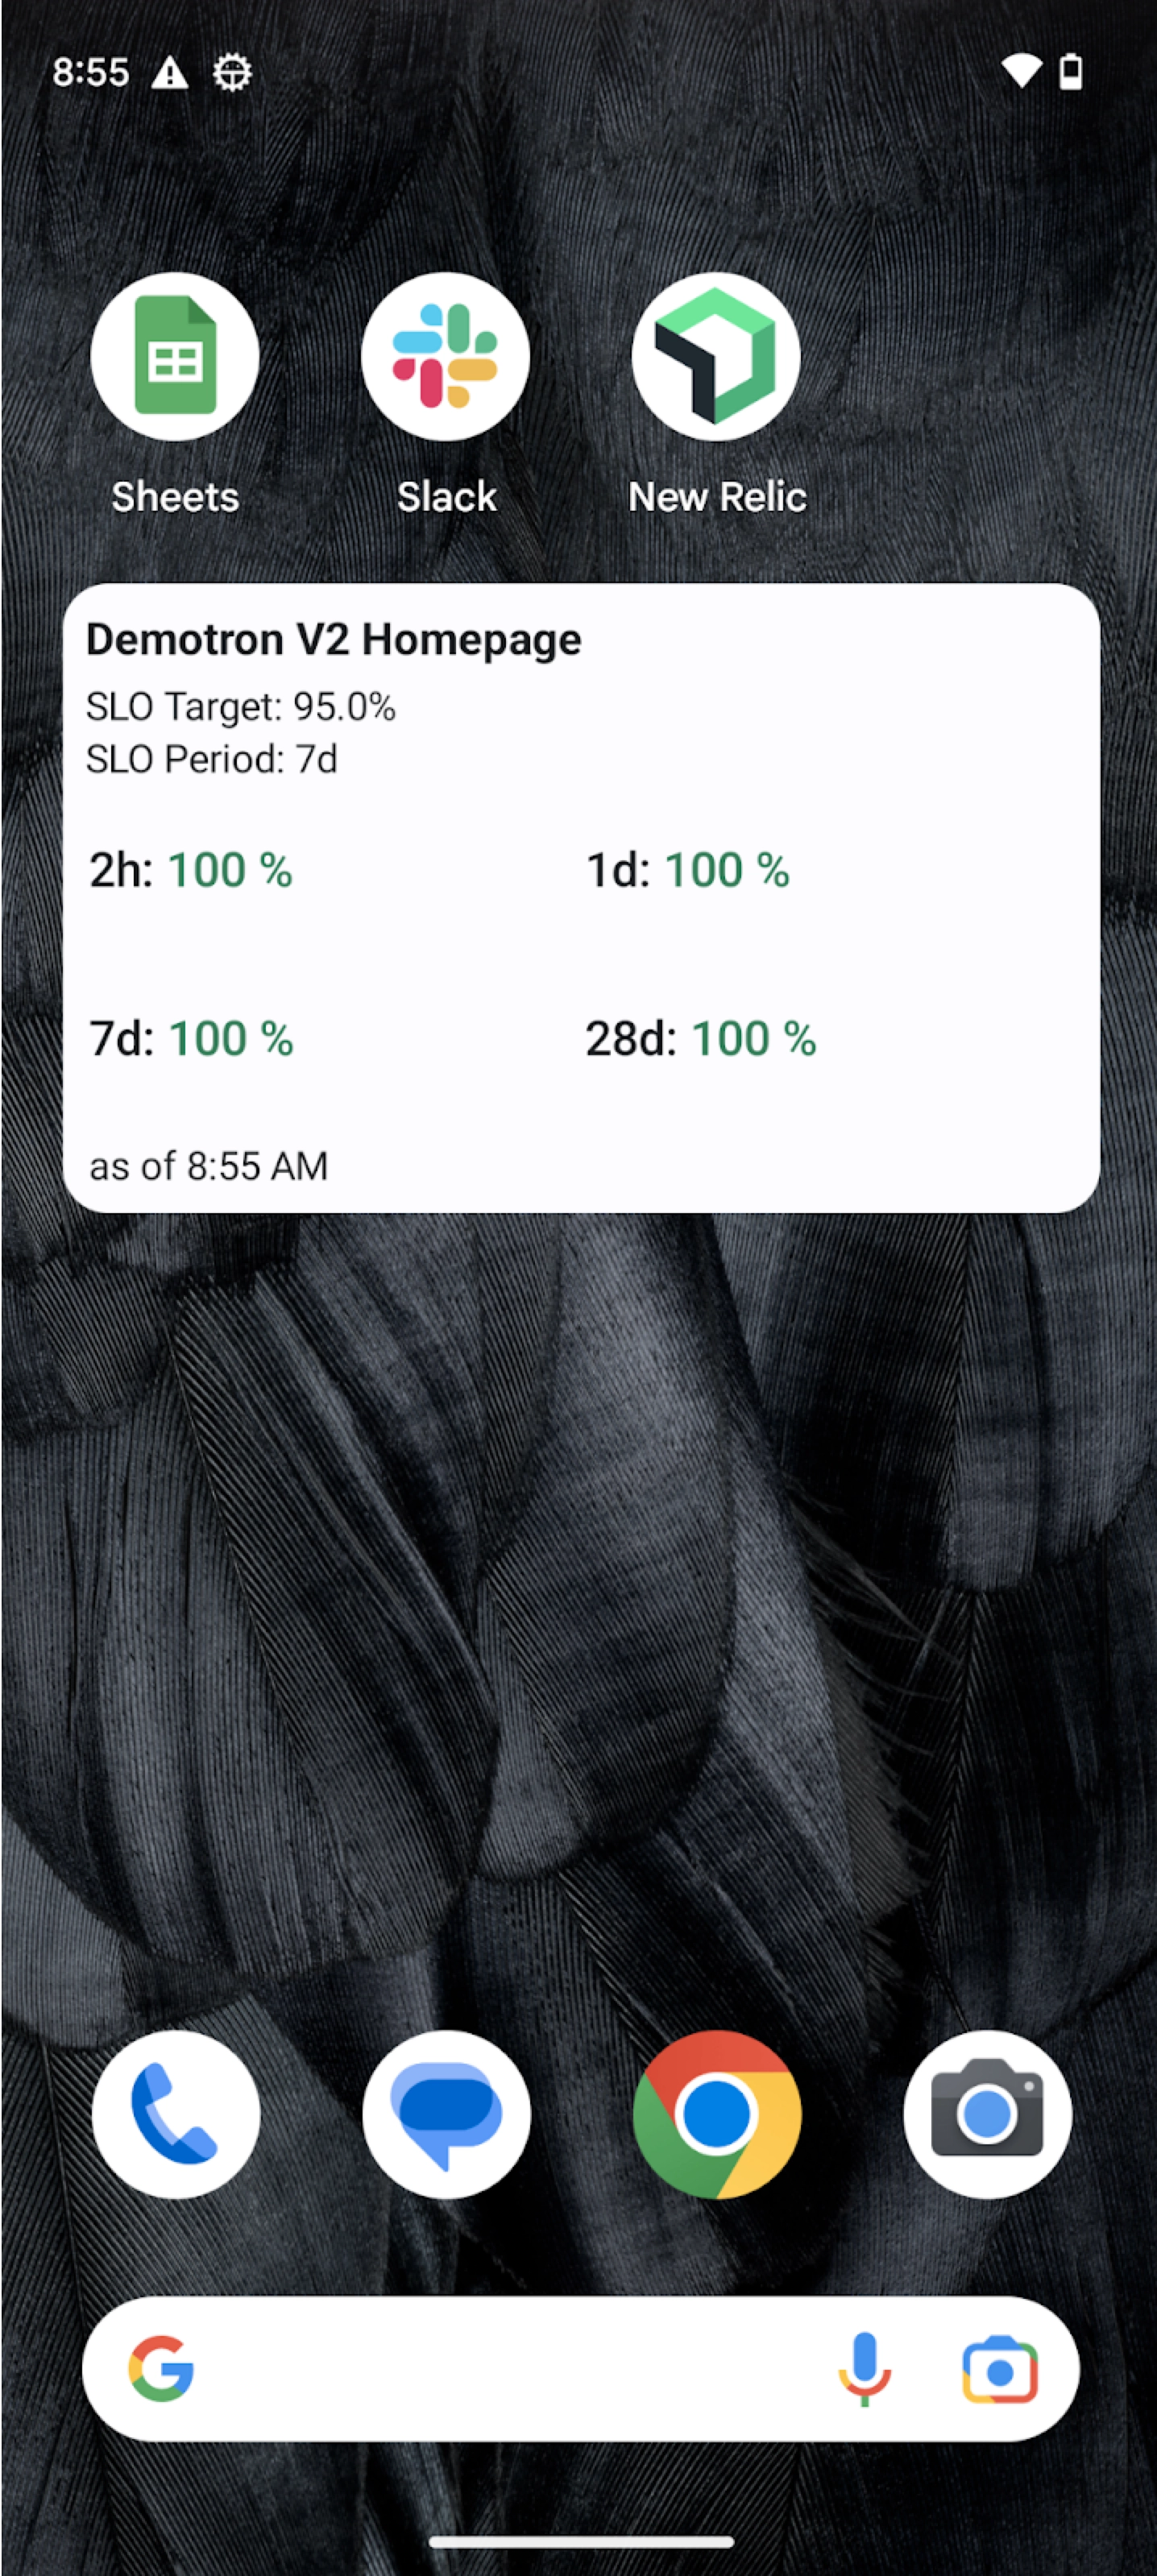 A screenshot of the service levels widget